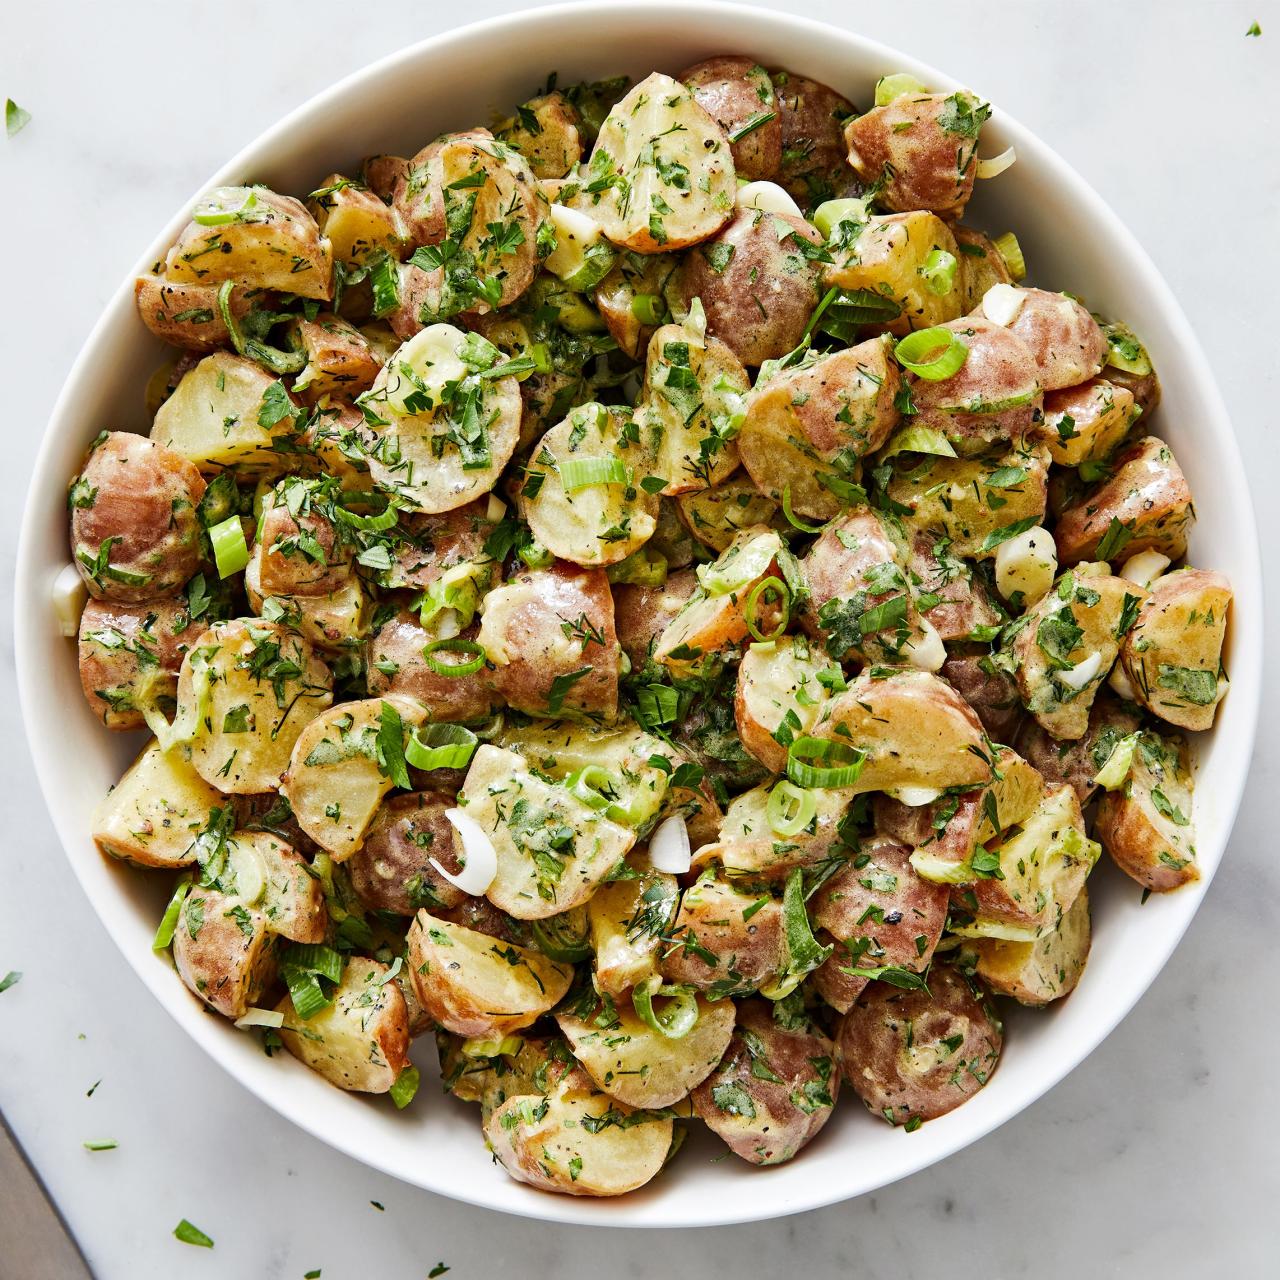 Best French Potato Salad Recipe - How To Make French Potato Salad